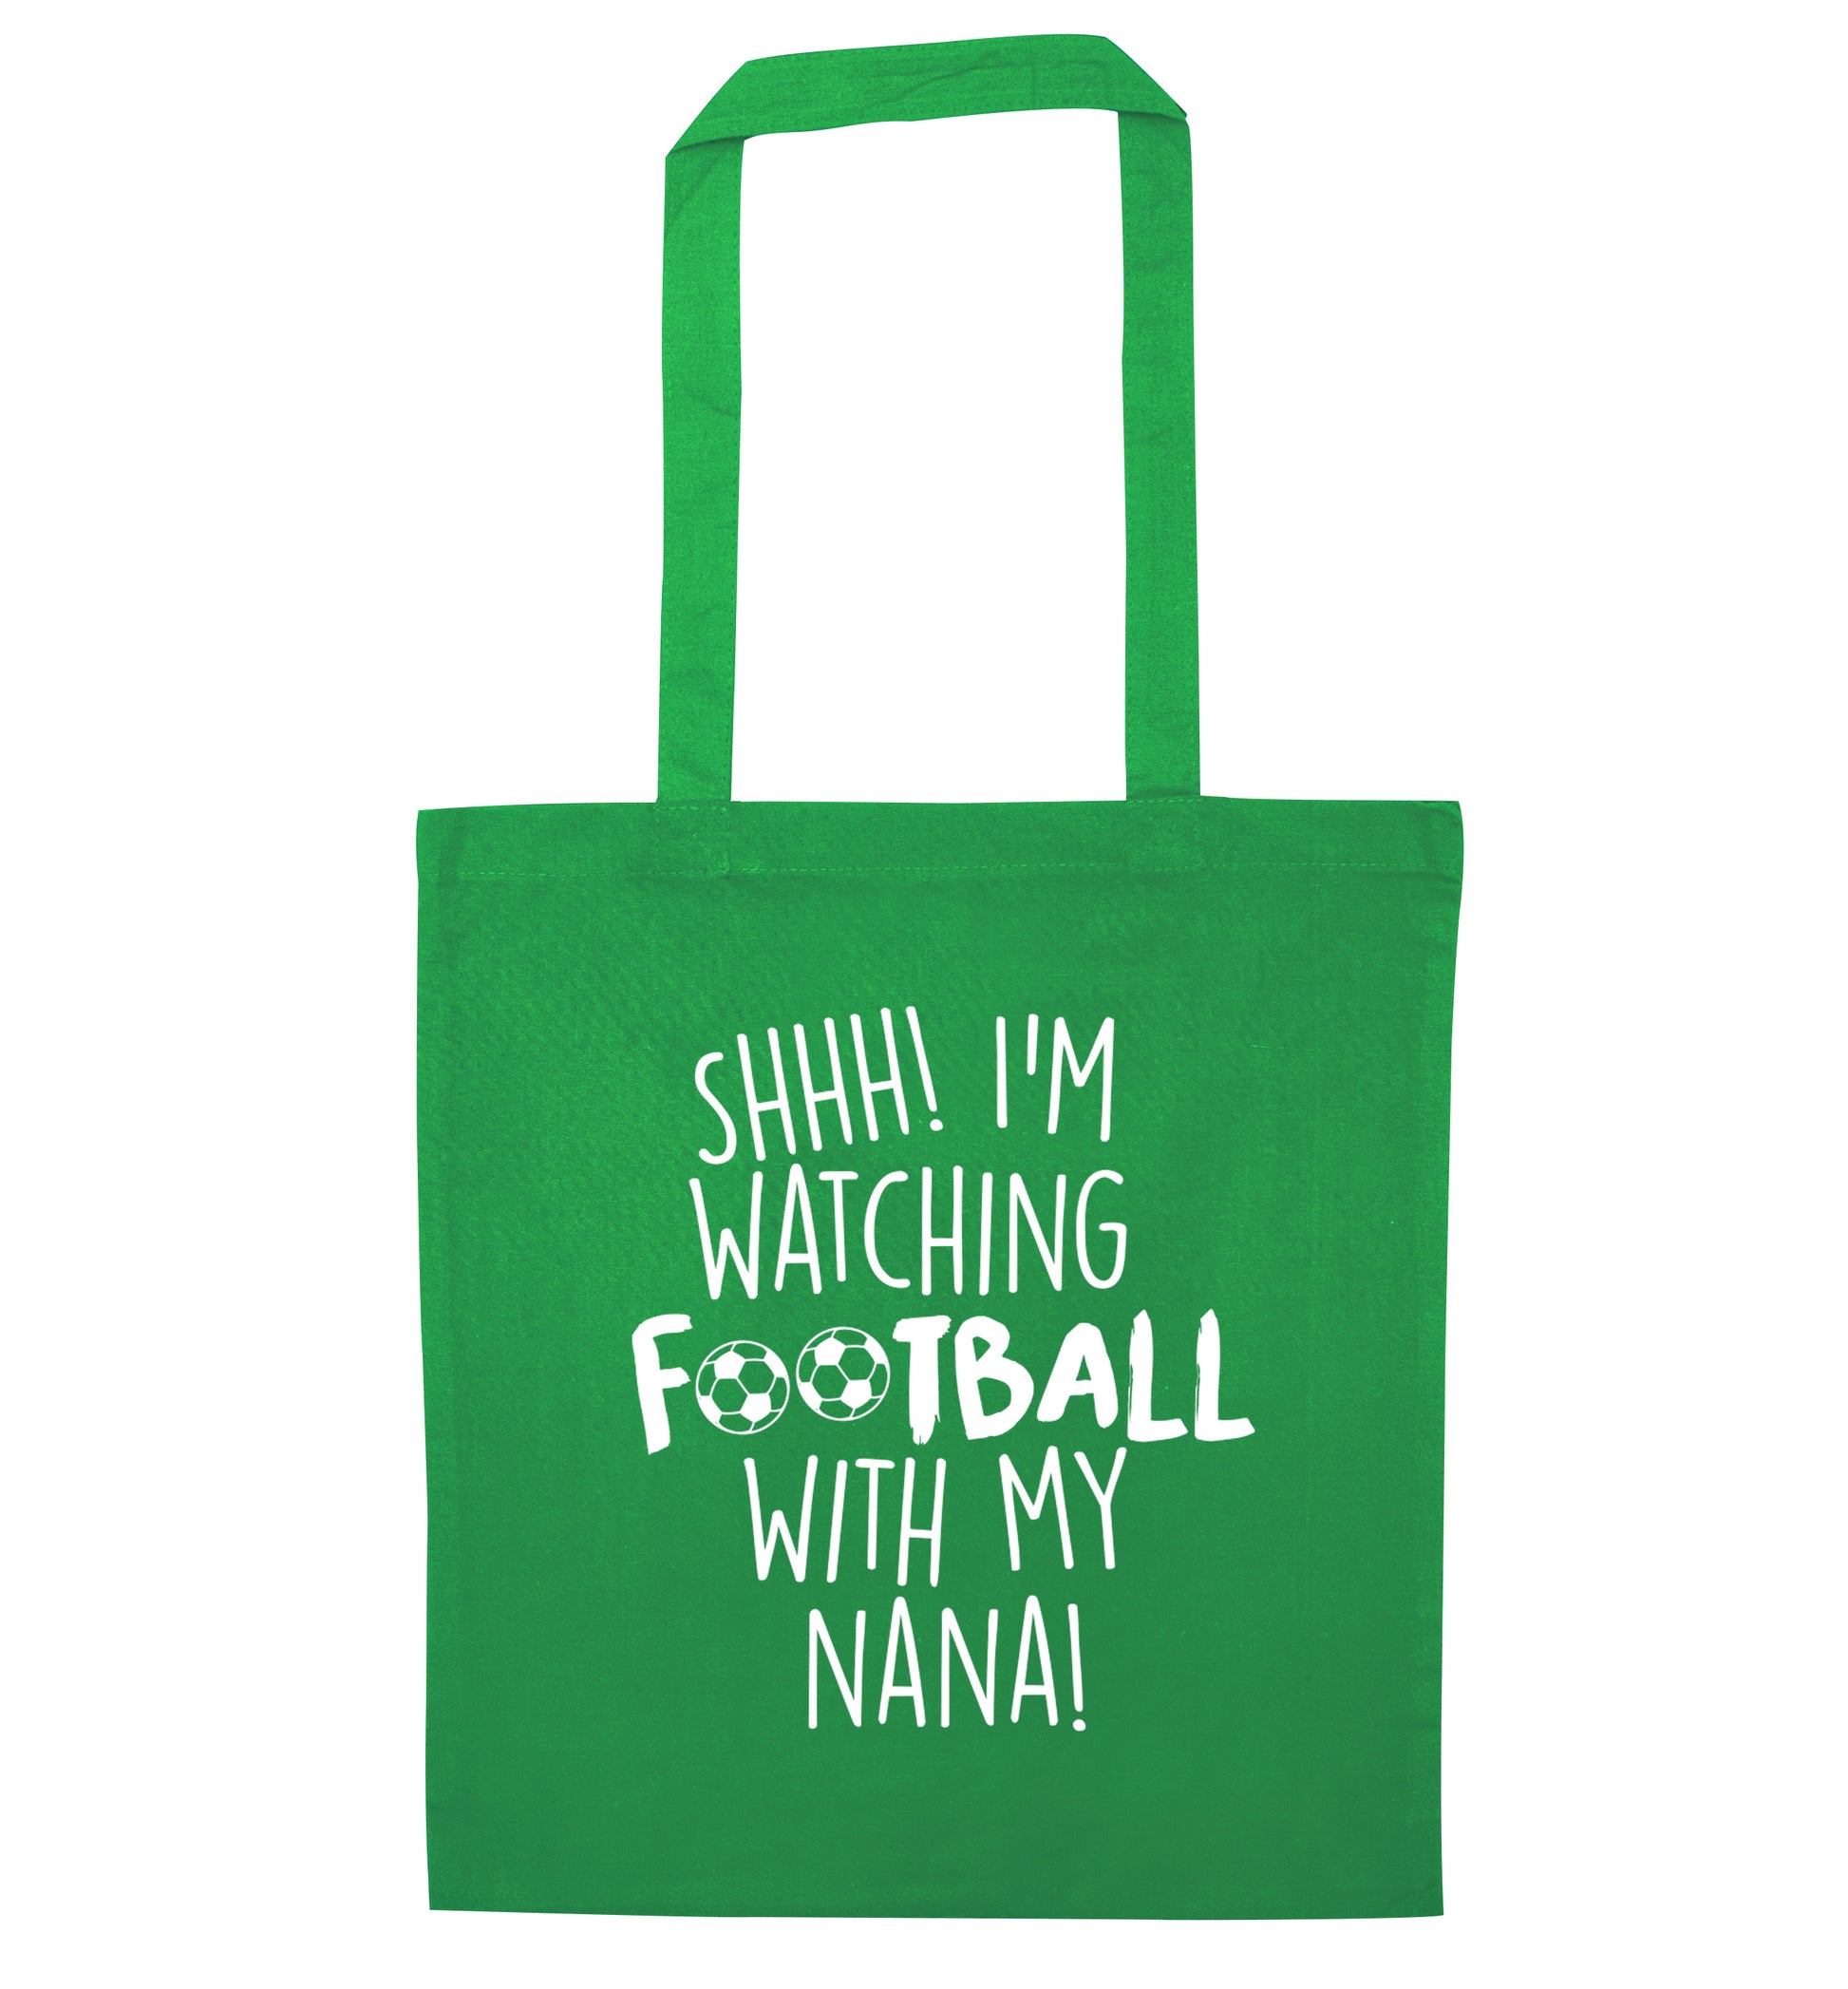 Shhh I'm watching football with my nana green tote bag